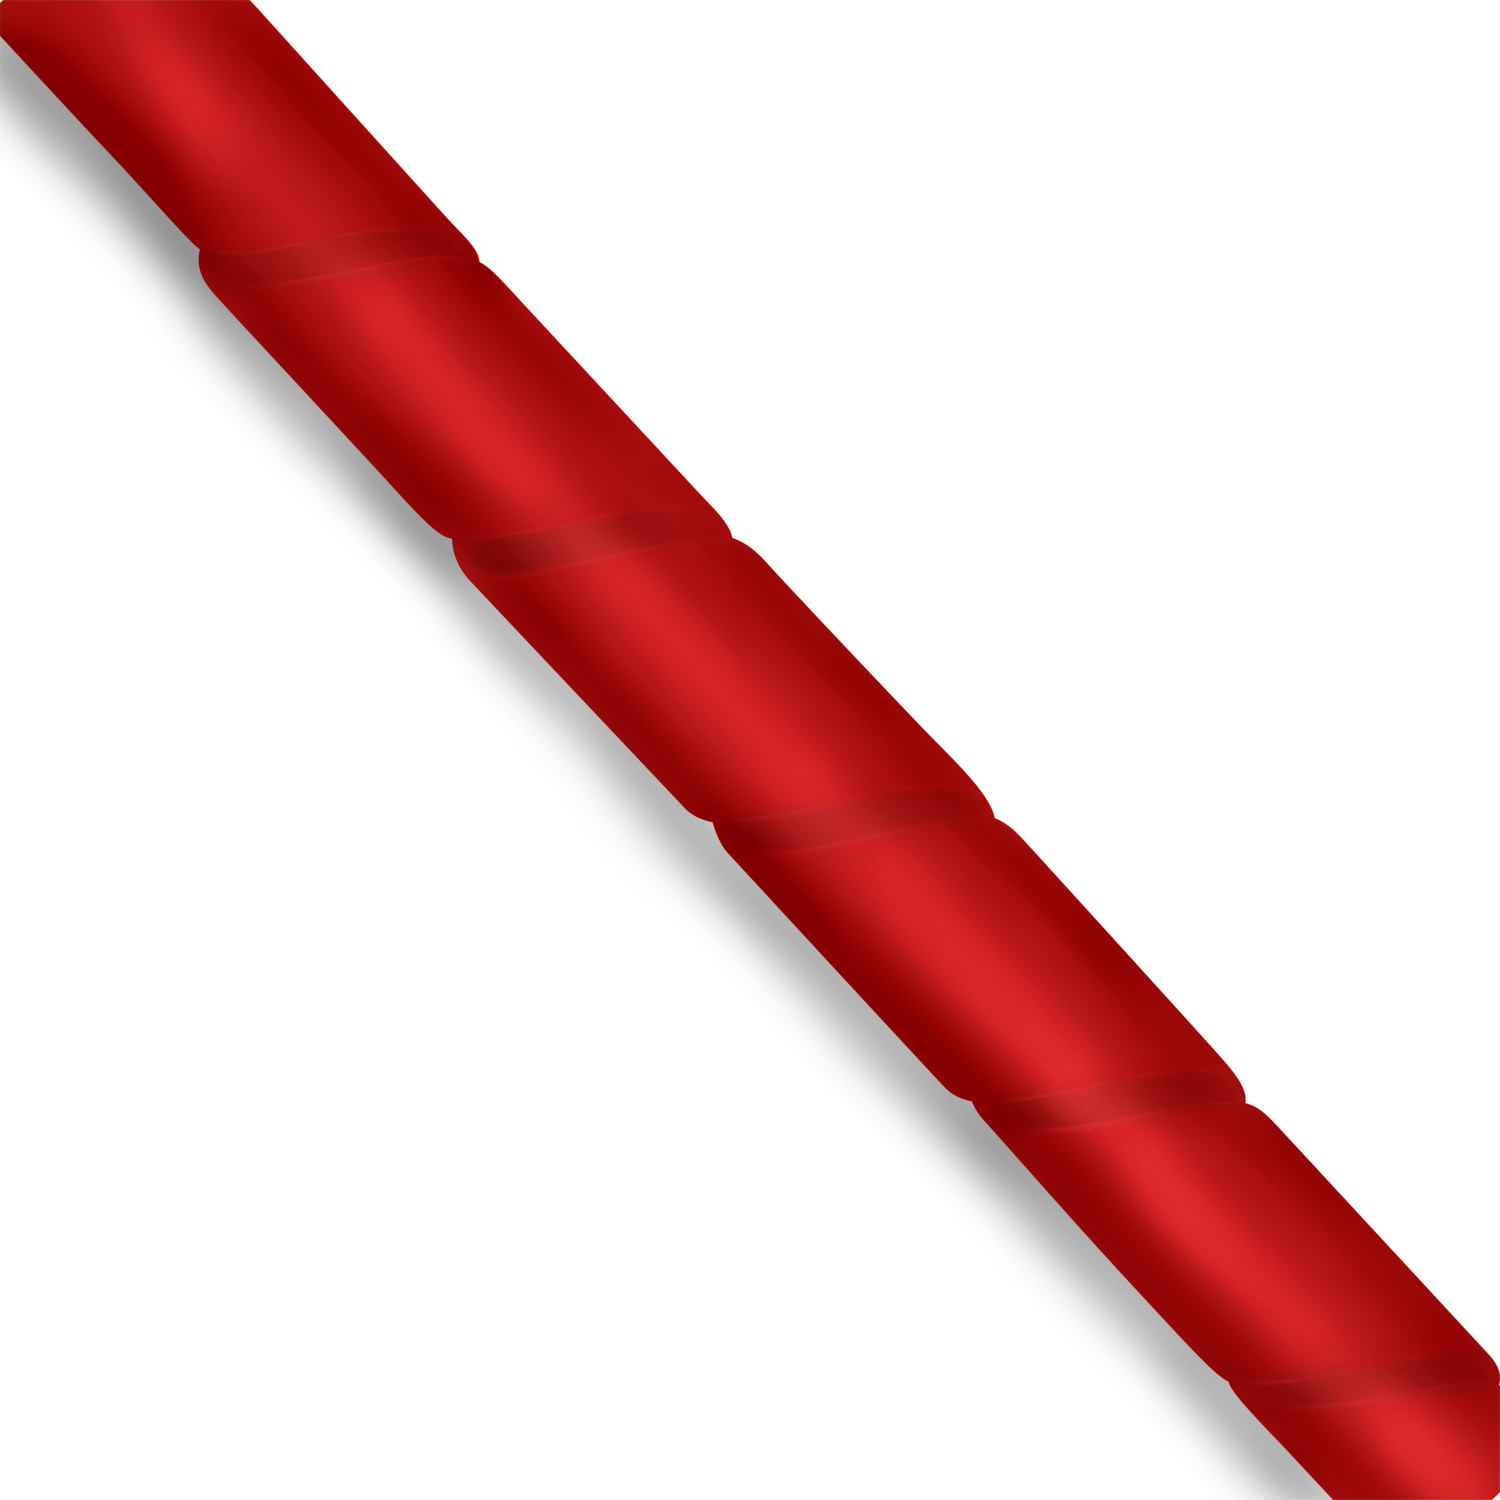 TPFNET 3er Pack Premium Rot, Rot 10m 20-130mm, Kabelschlauch, Spiral-Kabelschlauch